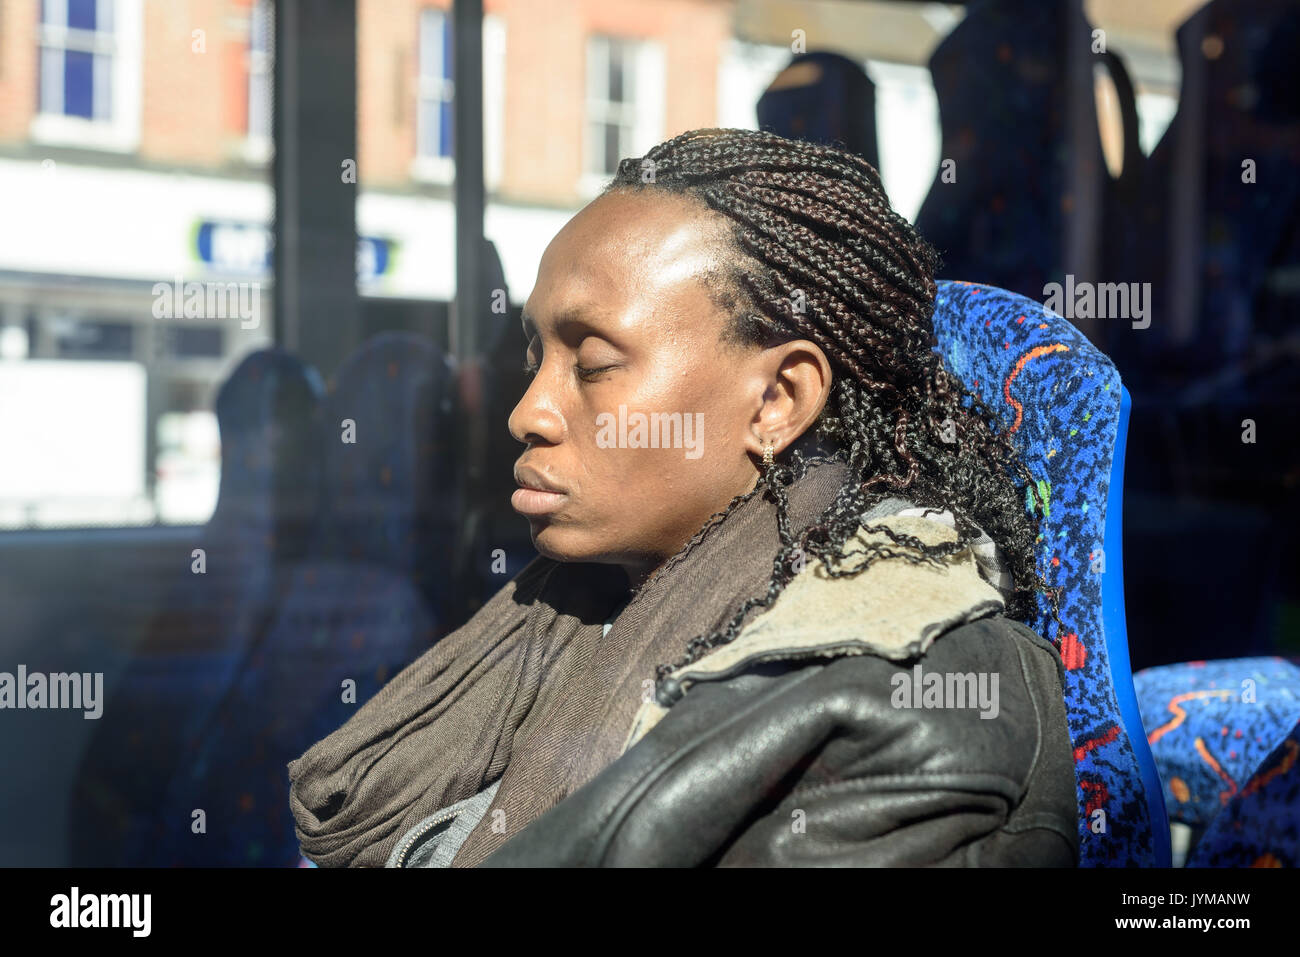 Sleepy black woman with dreadlocks hair sitting on a bus in bright sunshine Stock Photo